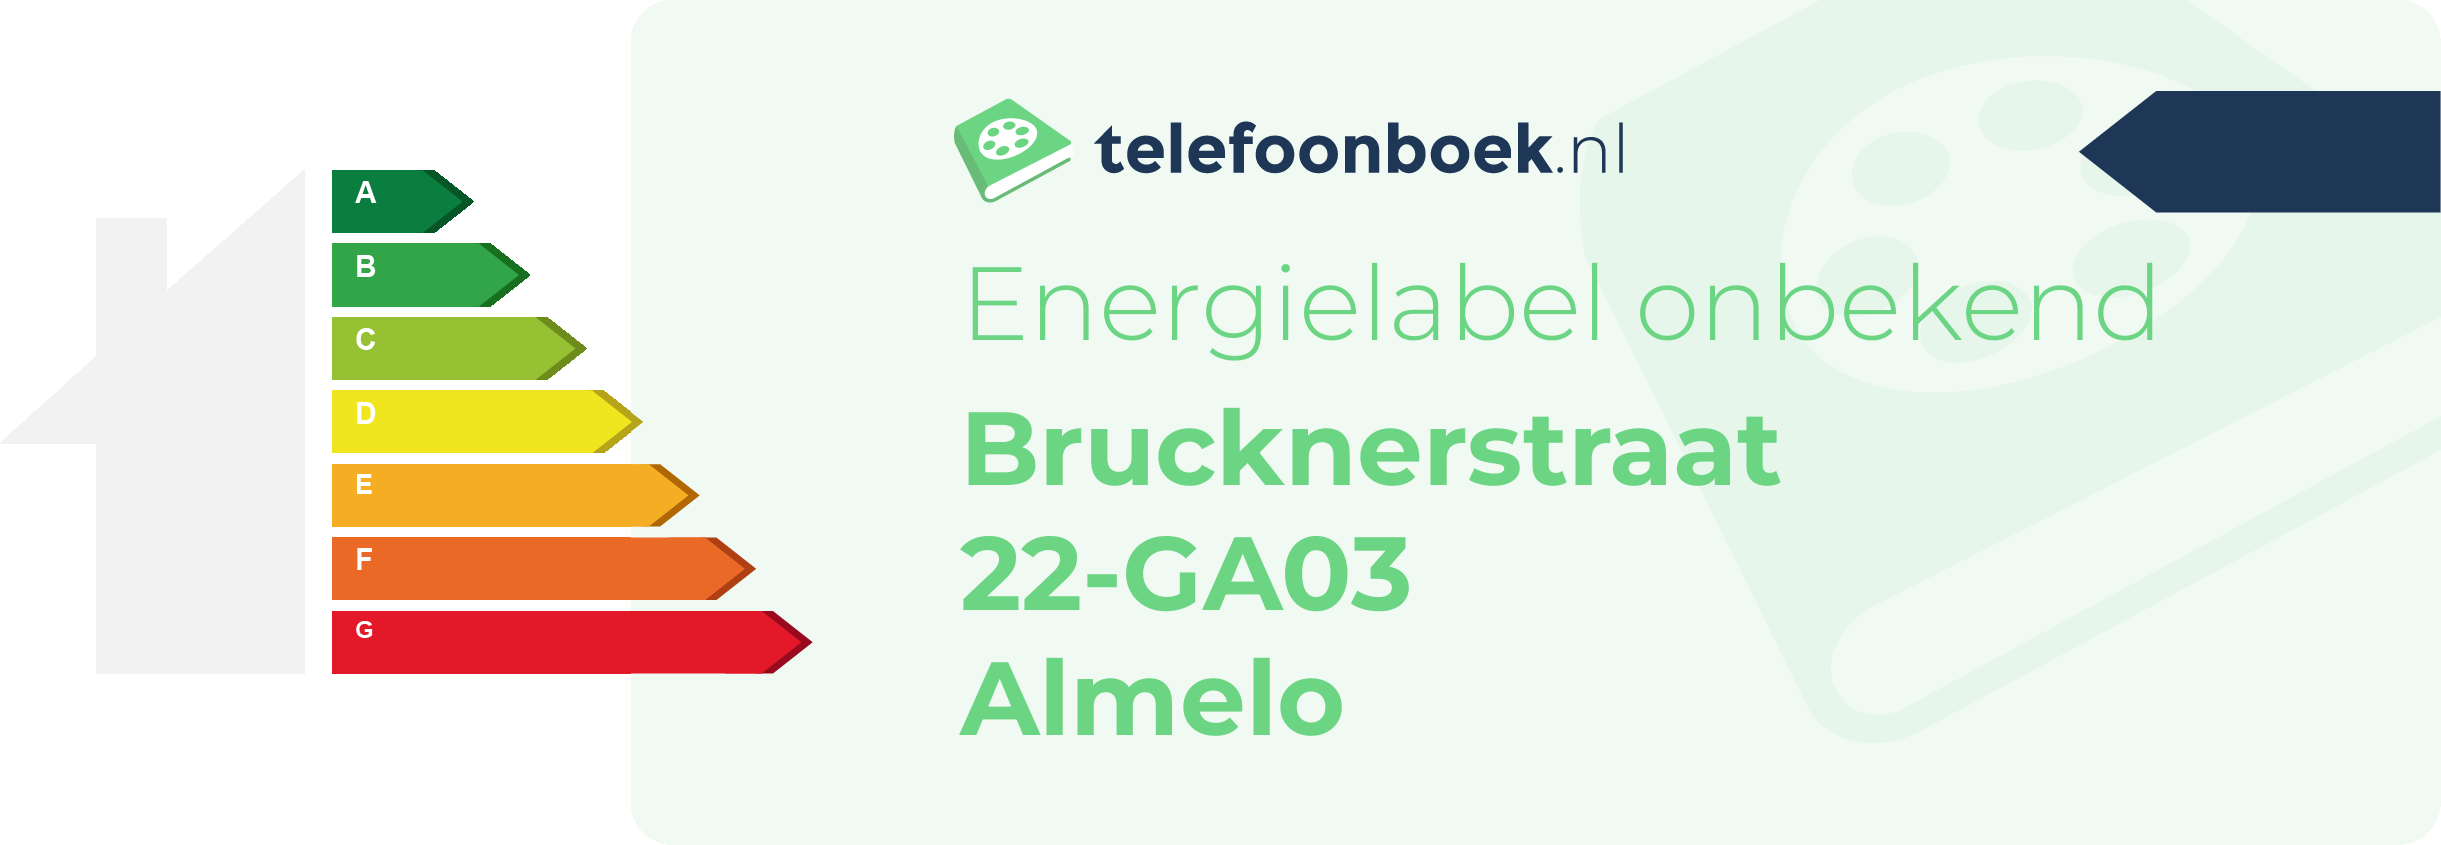 Energielabel Brucknerstraat 22-GA03 Almelo